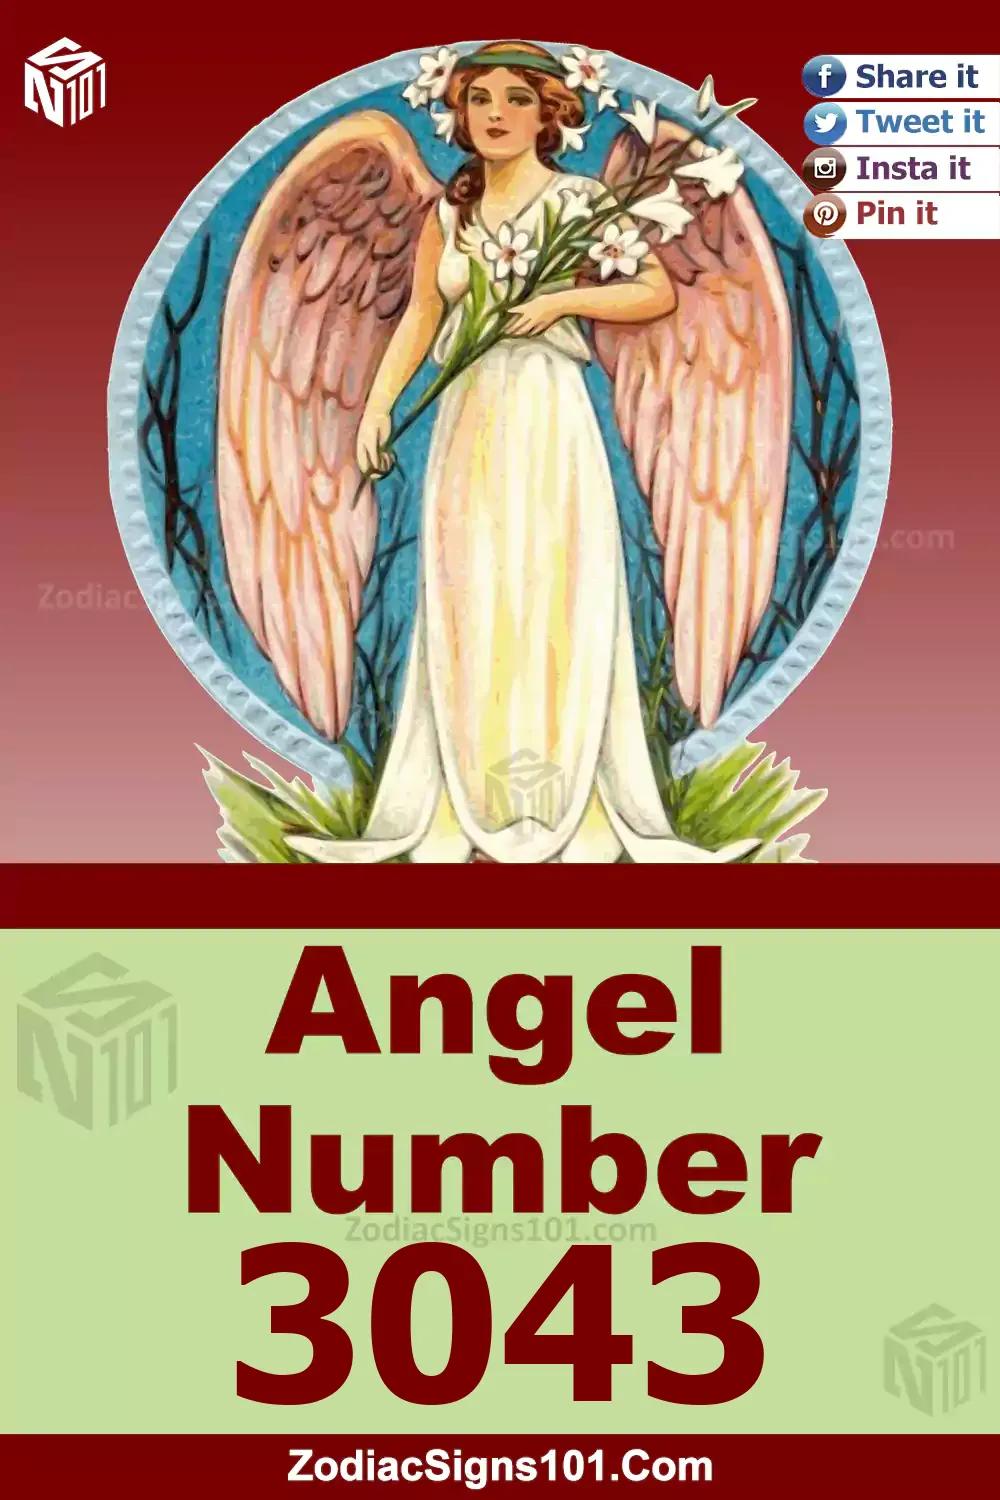 3043-Angel-Number-Meaning.jpg